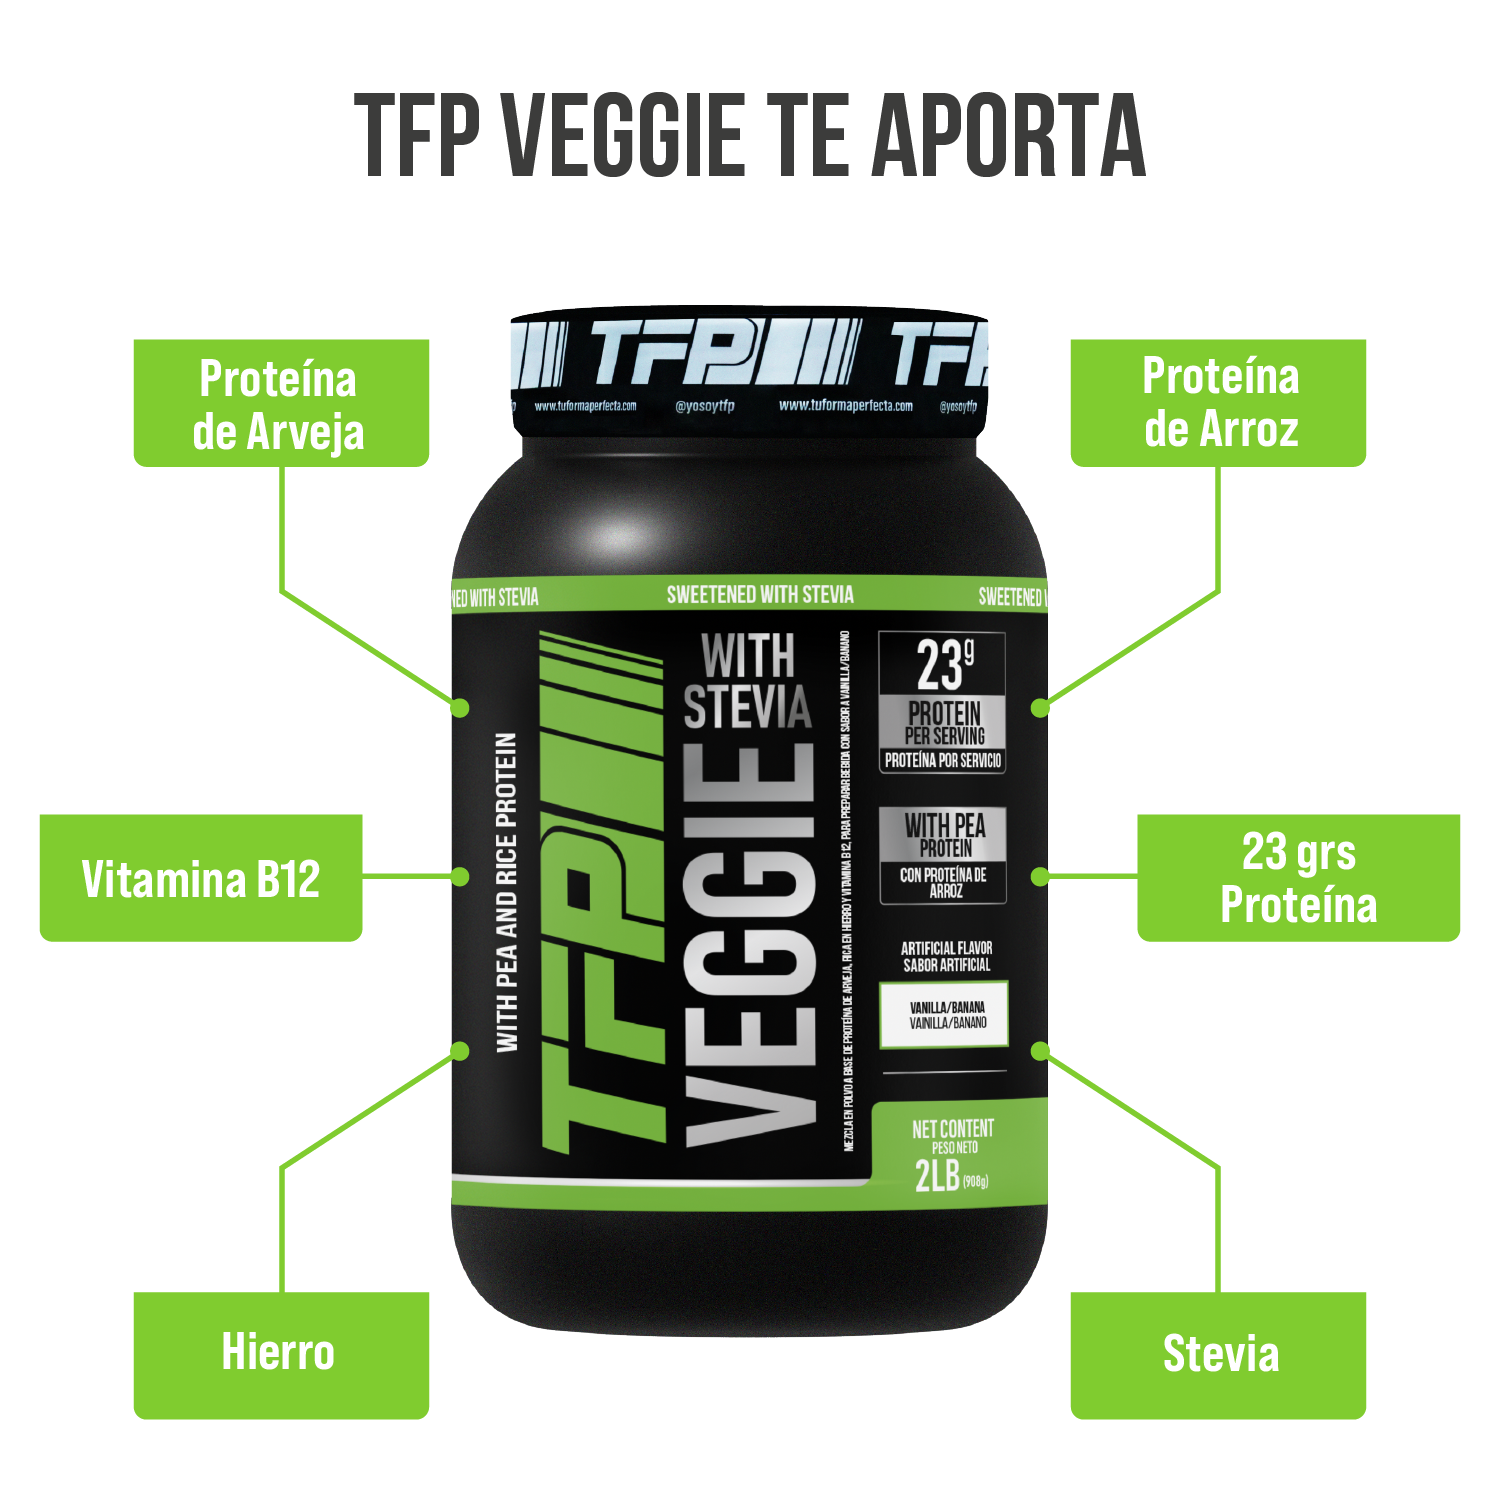 Proteina Vegana TFP Veggie 2 Lbs (2)